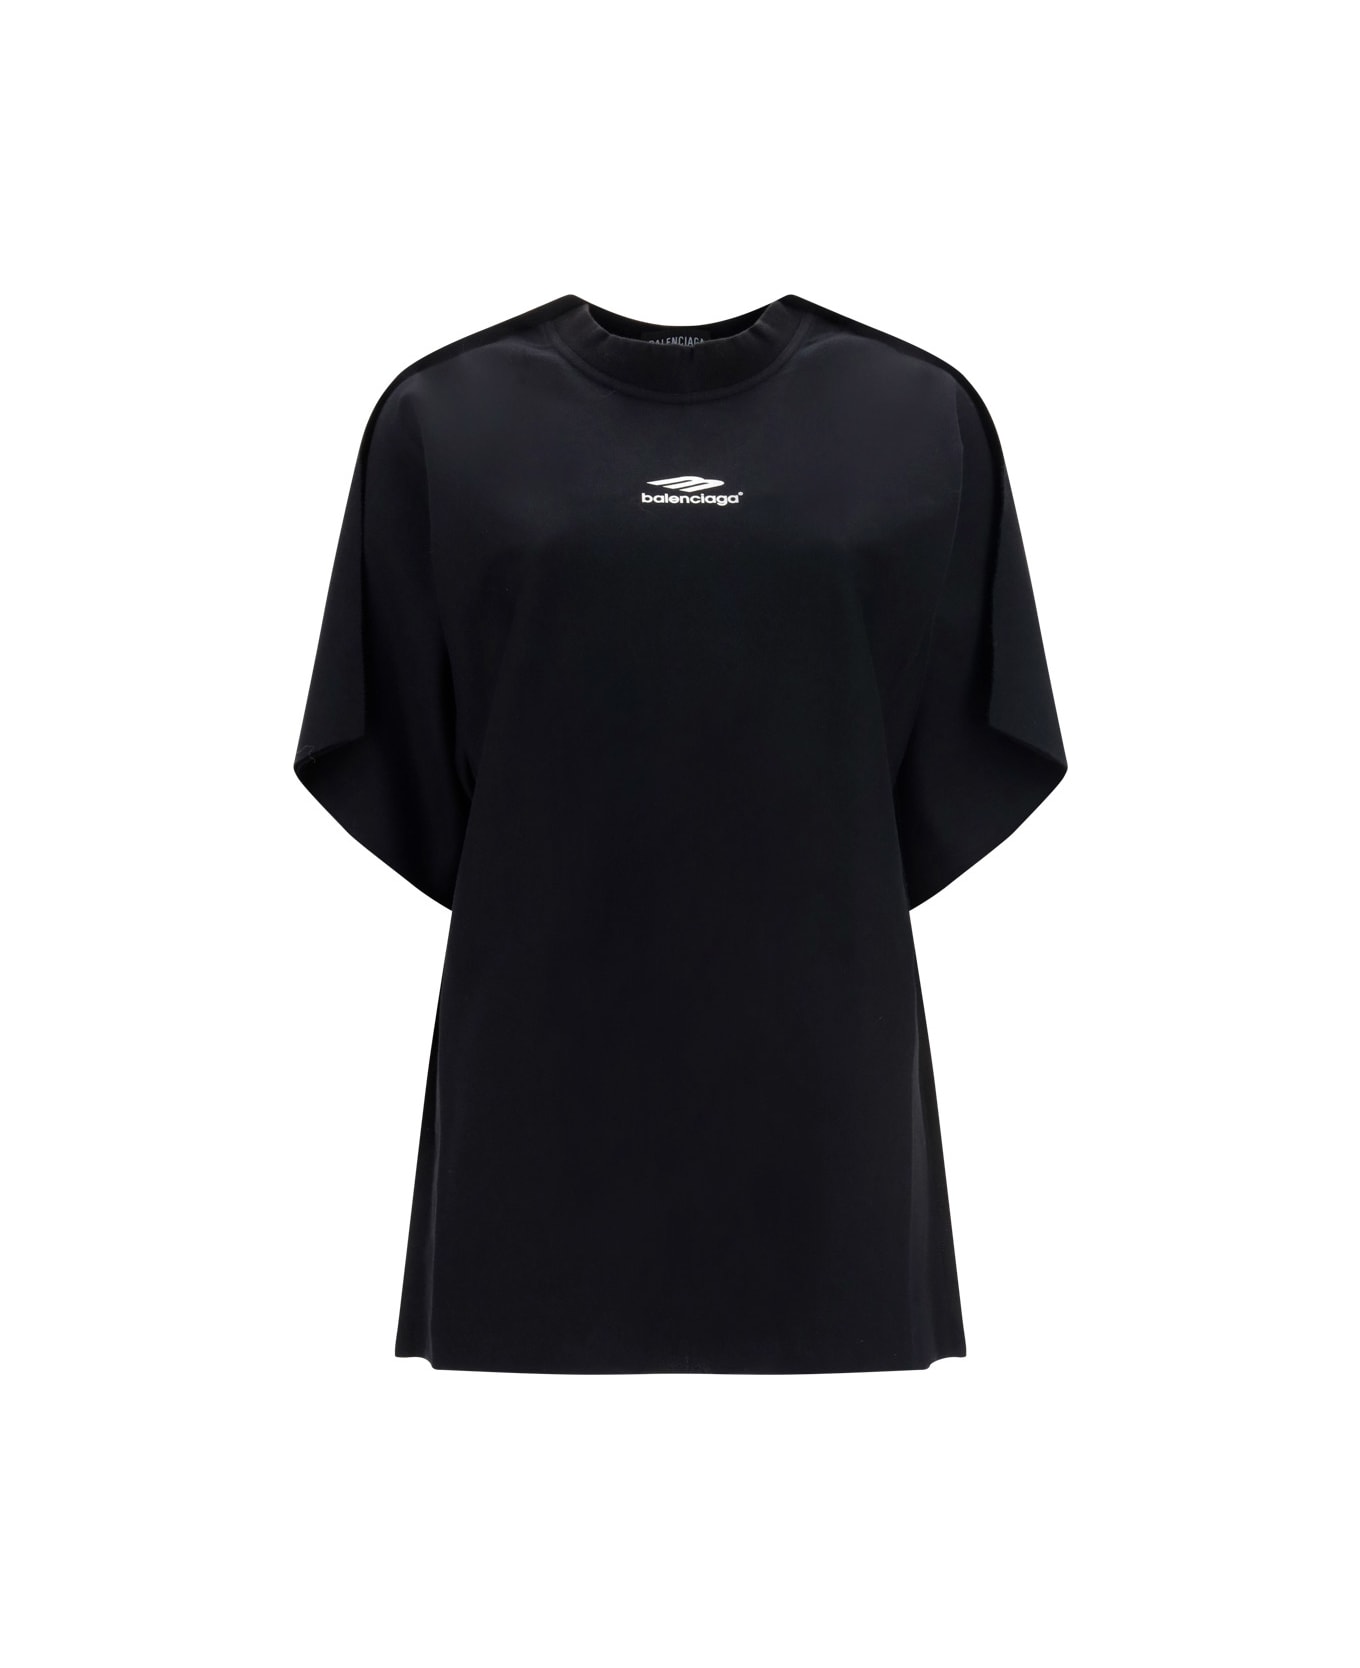 Balenciaga T-shirt - Black/white